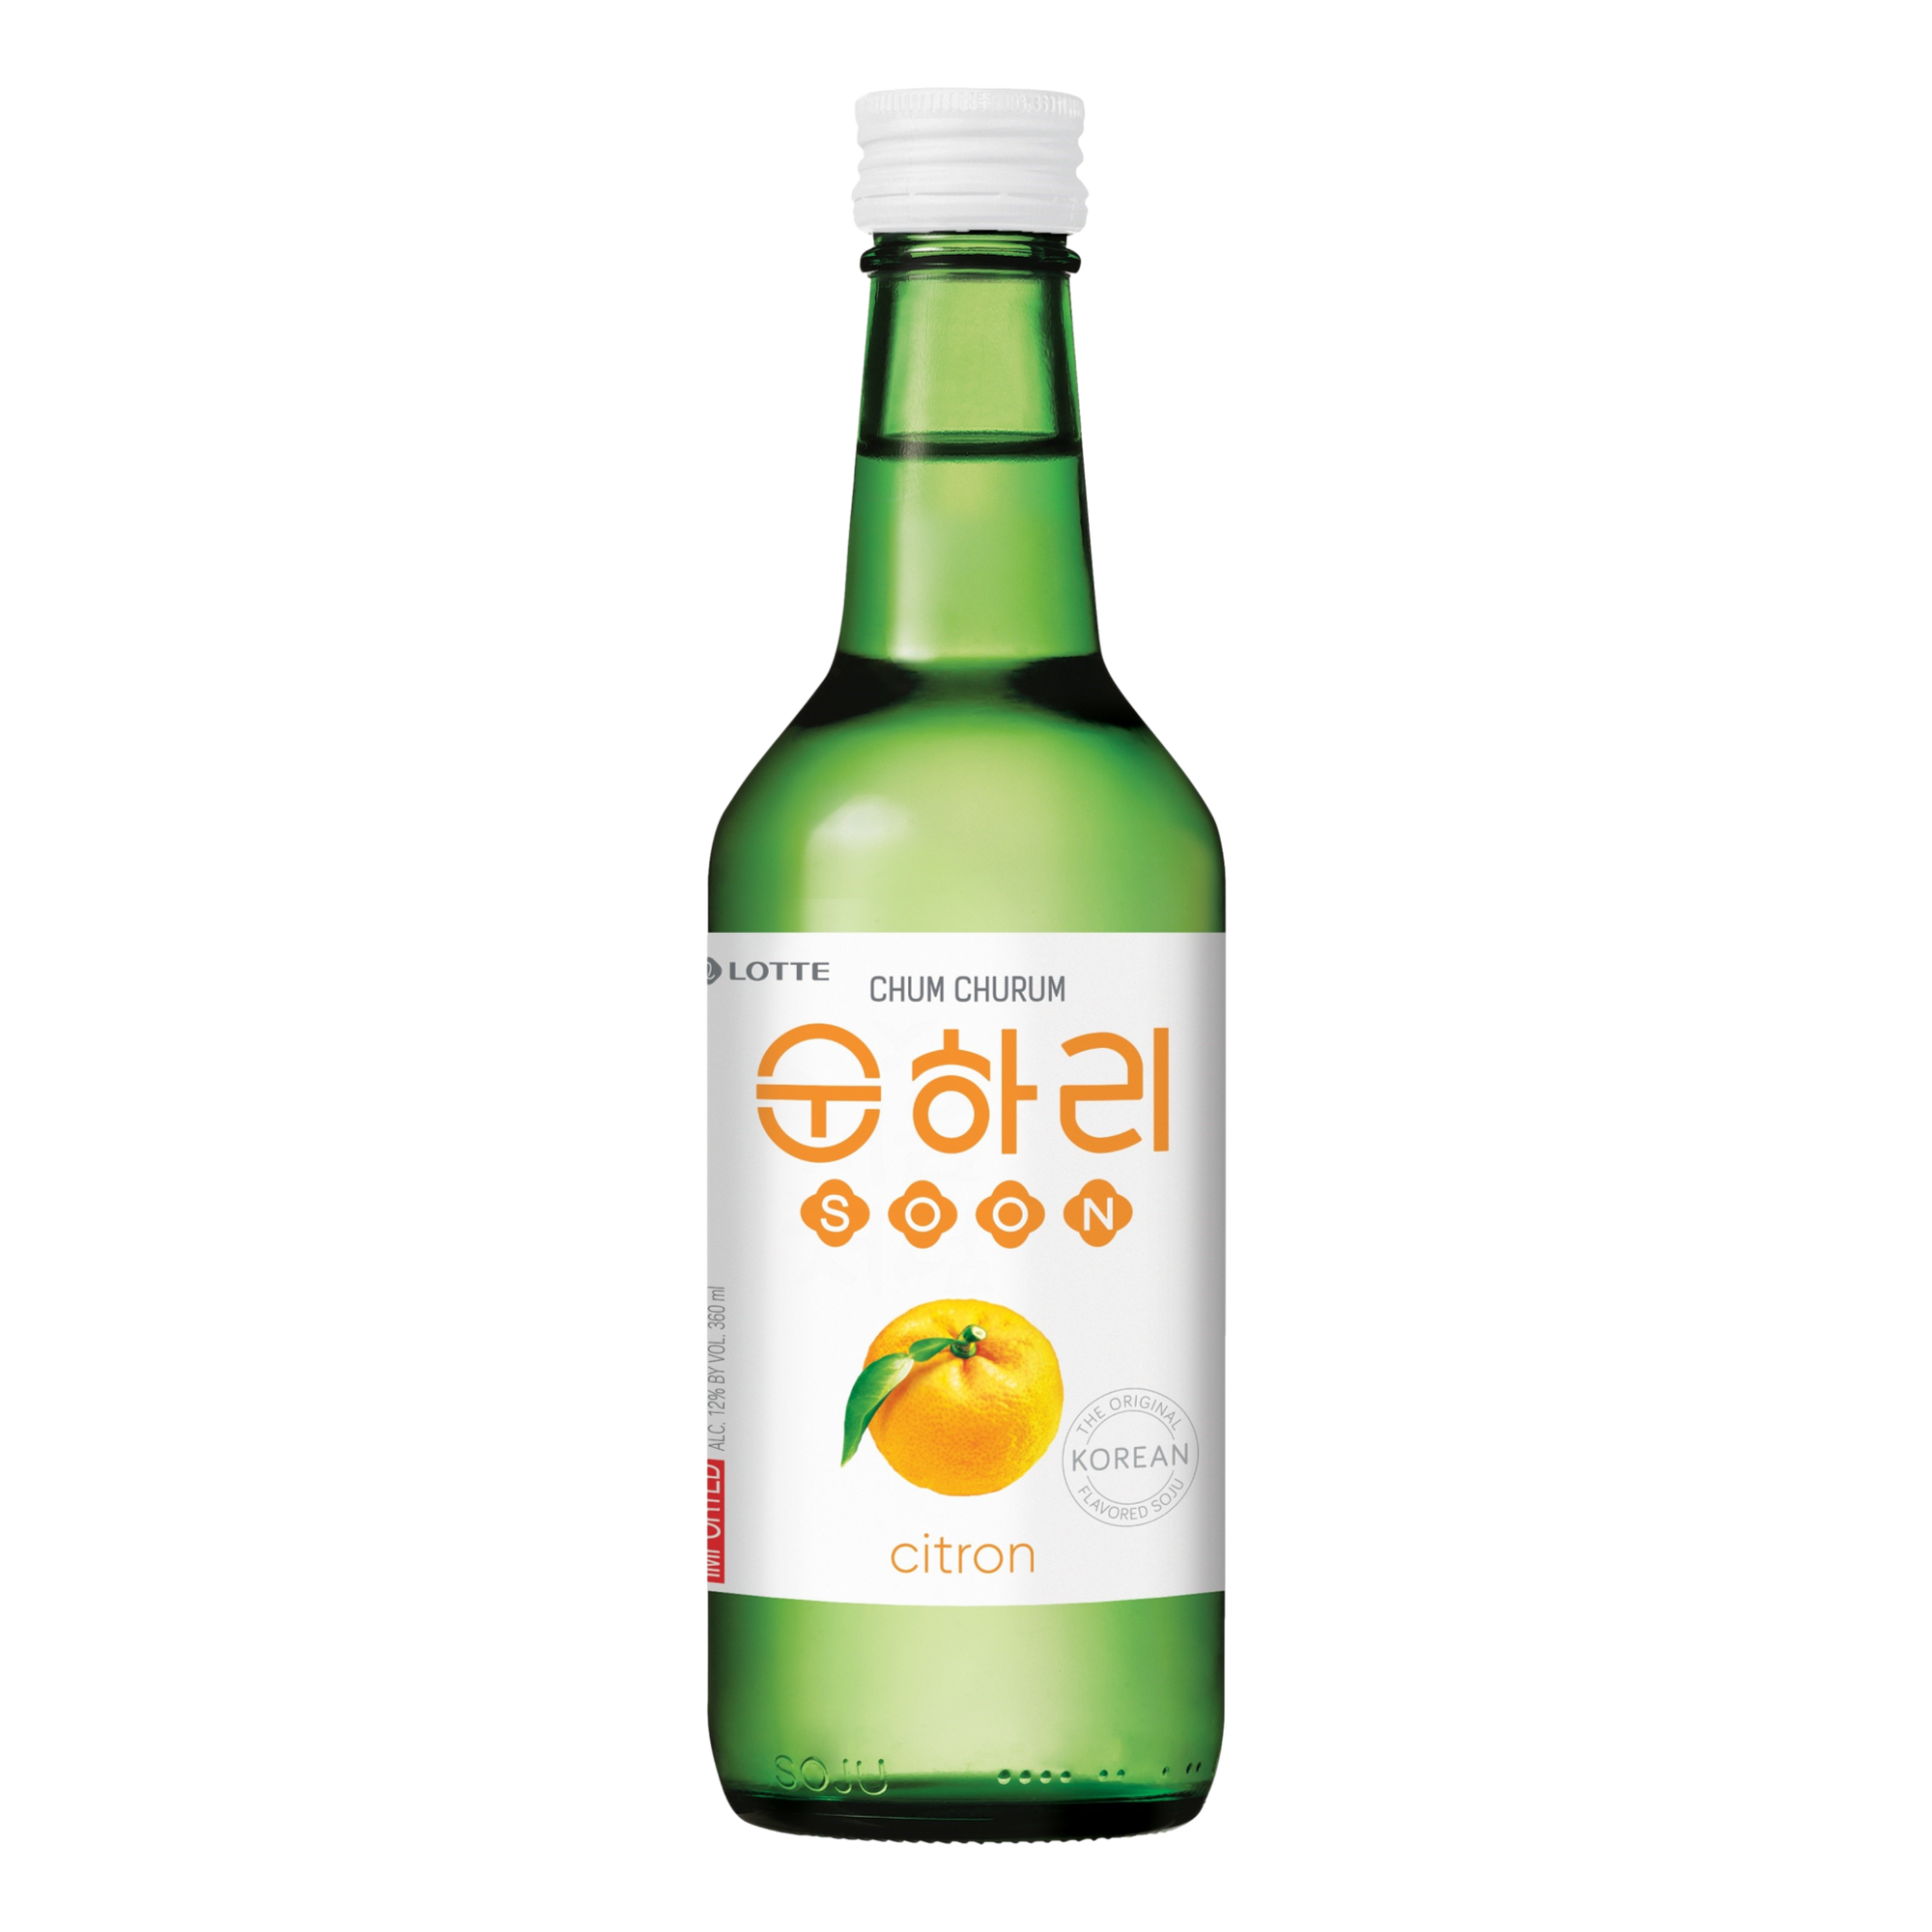 Lotte Chum Churum Citron Soju 360ml Bottle Single